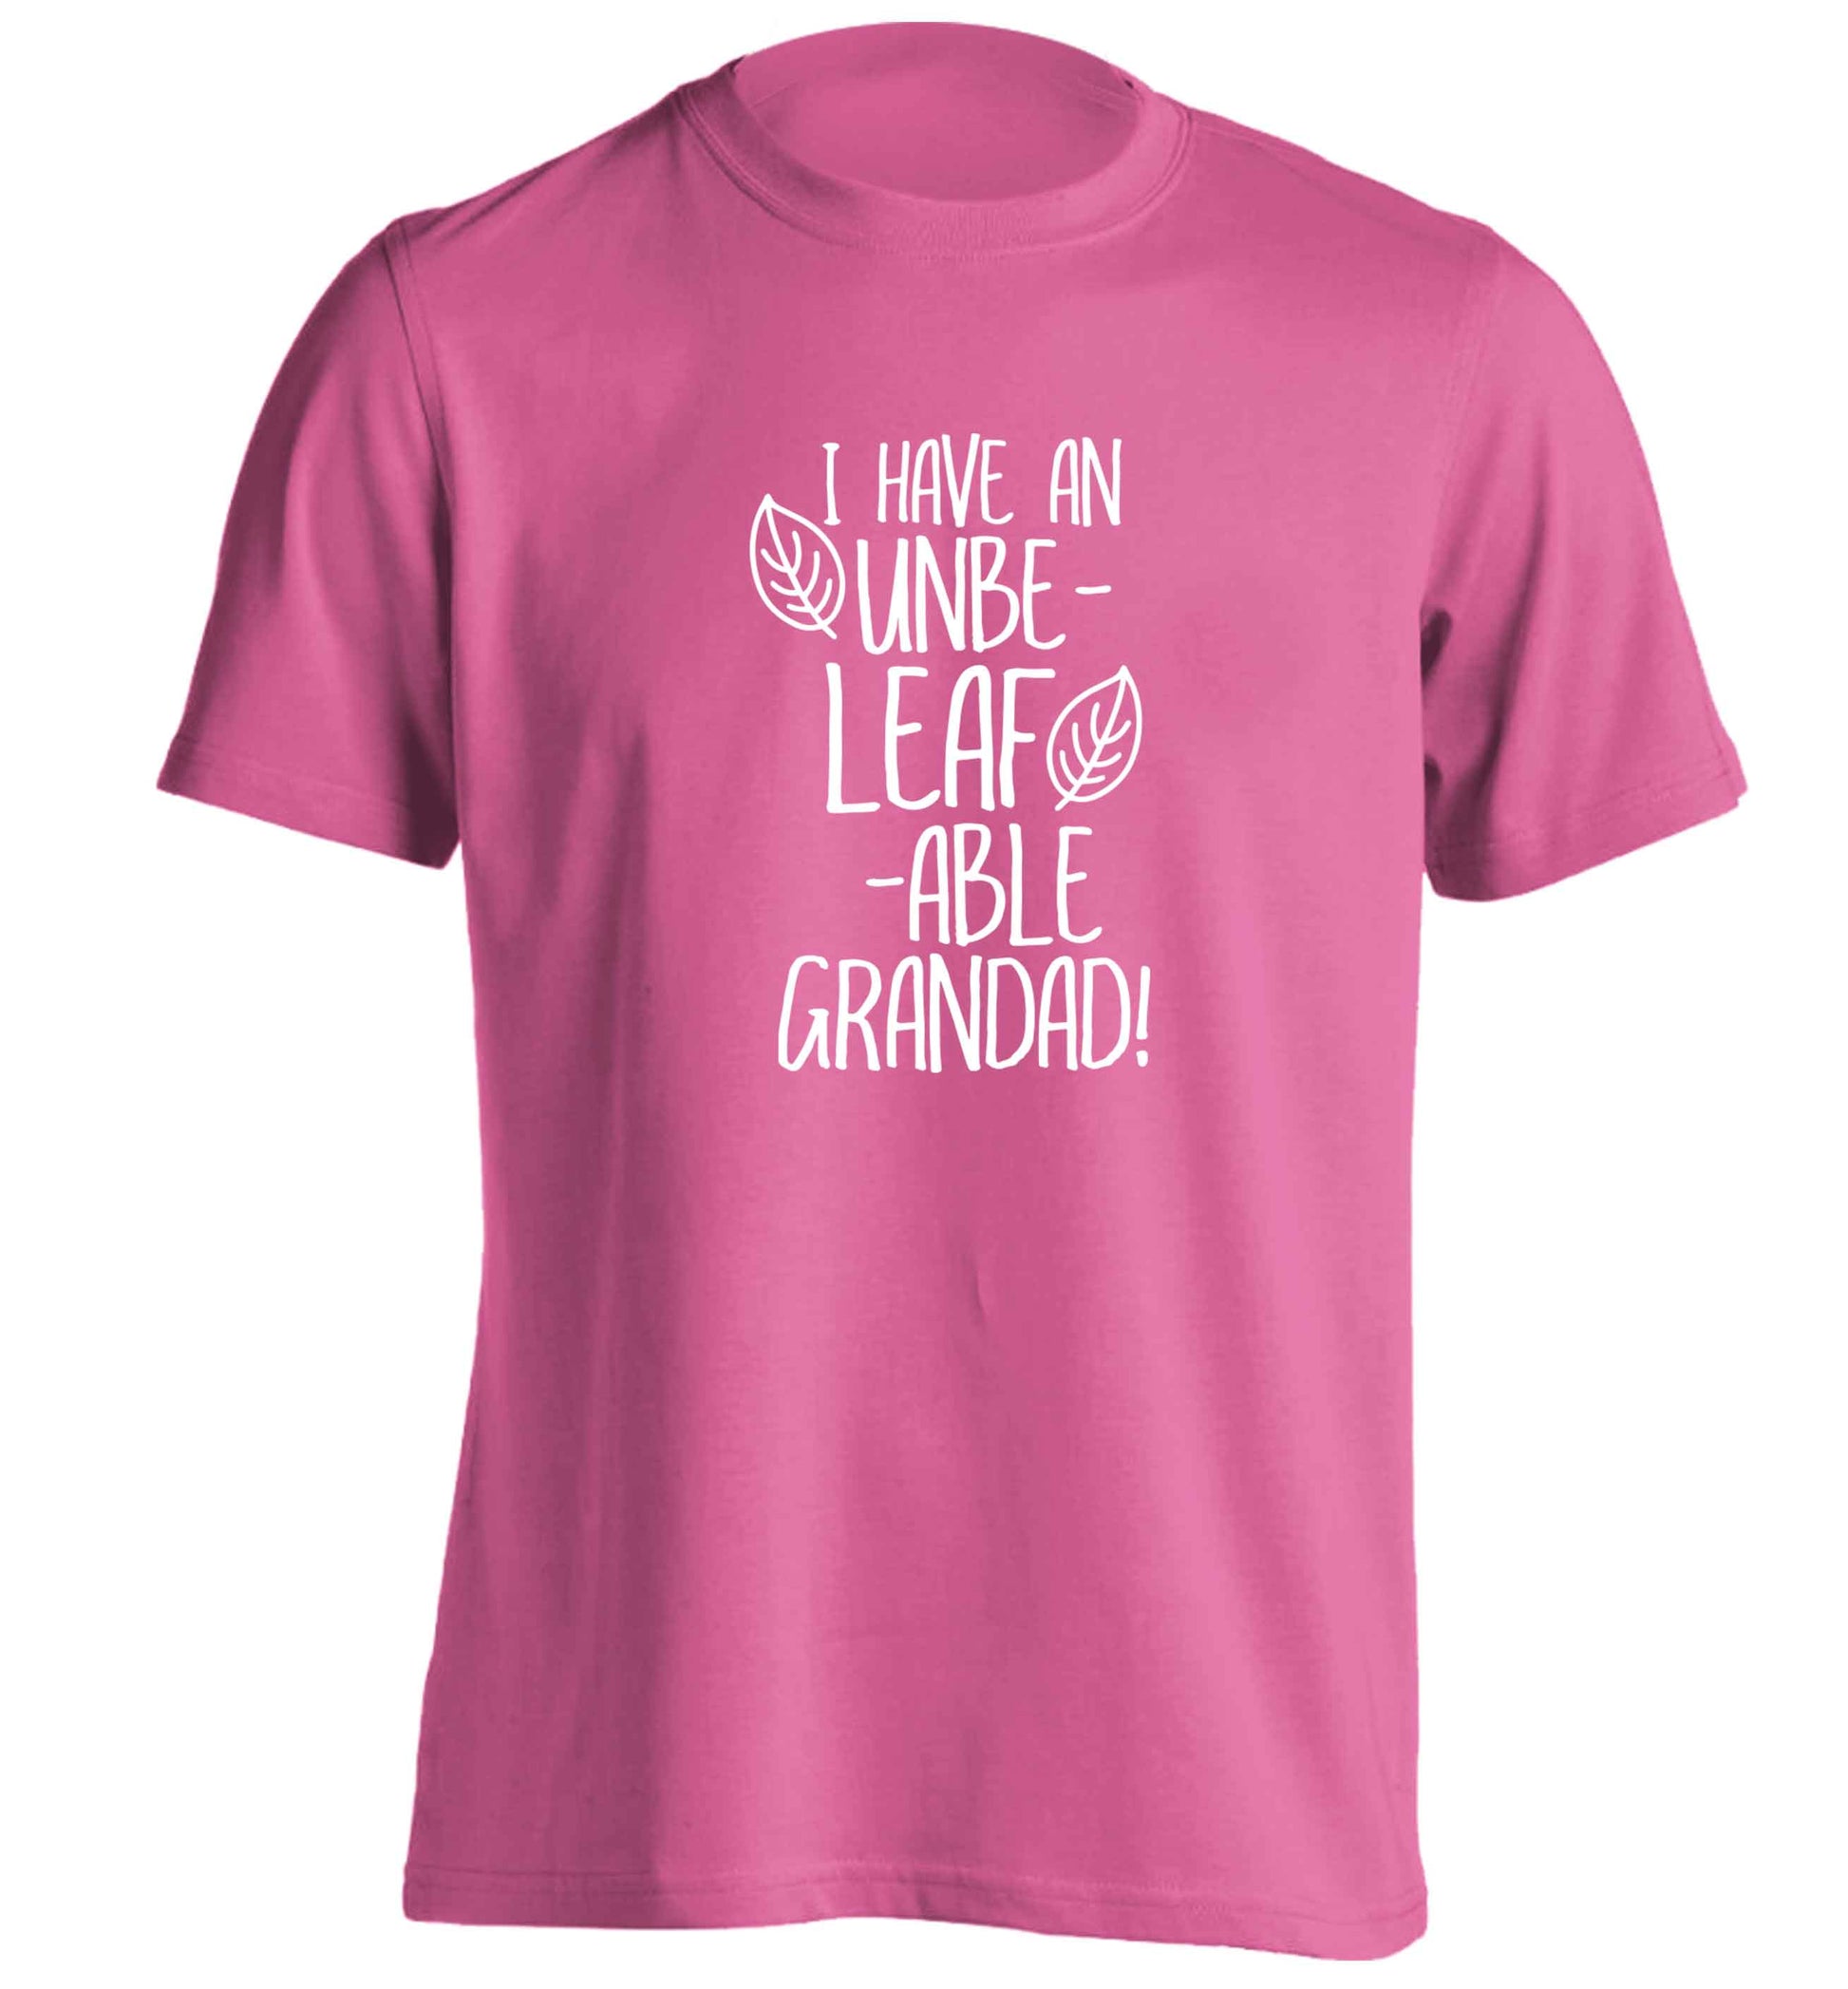 I have an unbe-leaf-able grandad adults unisex pink Tshirt 2XL